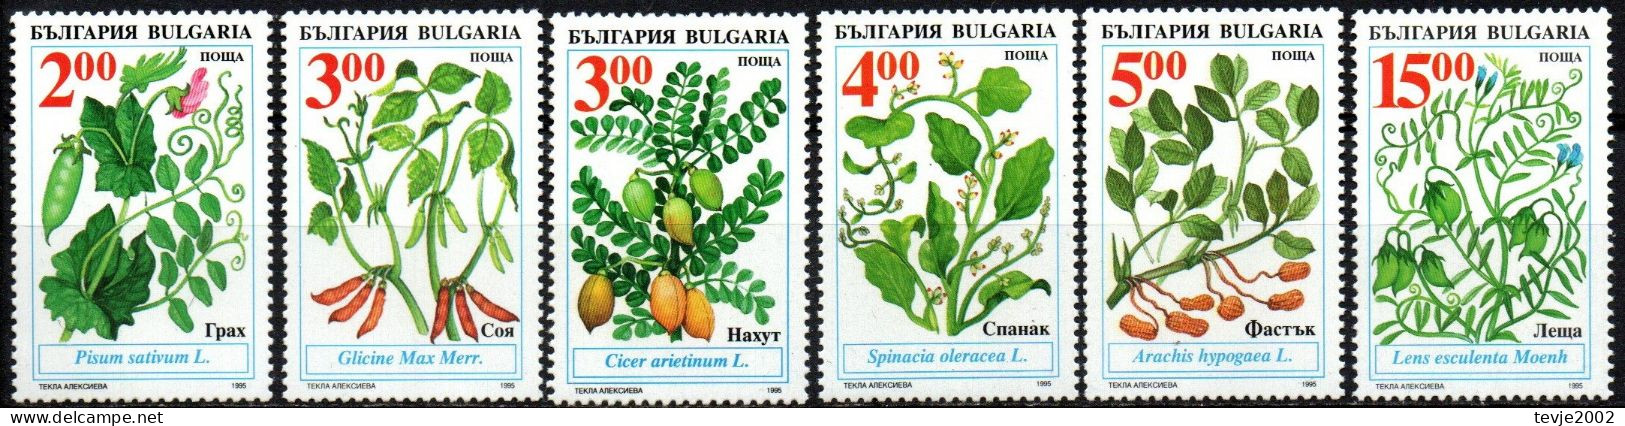 Bulgarien 1995 - Mi.Nr. 4168 - 4173 - Postfrisch MNH - Pflanzen Plants Gemüse Crops - Vegetables